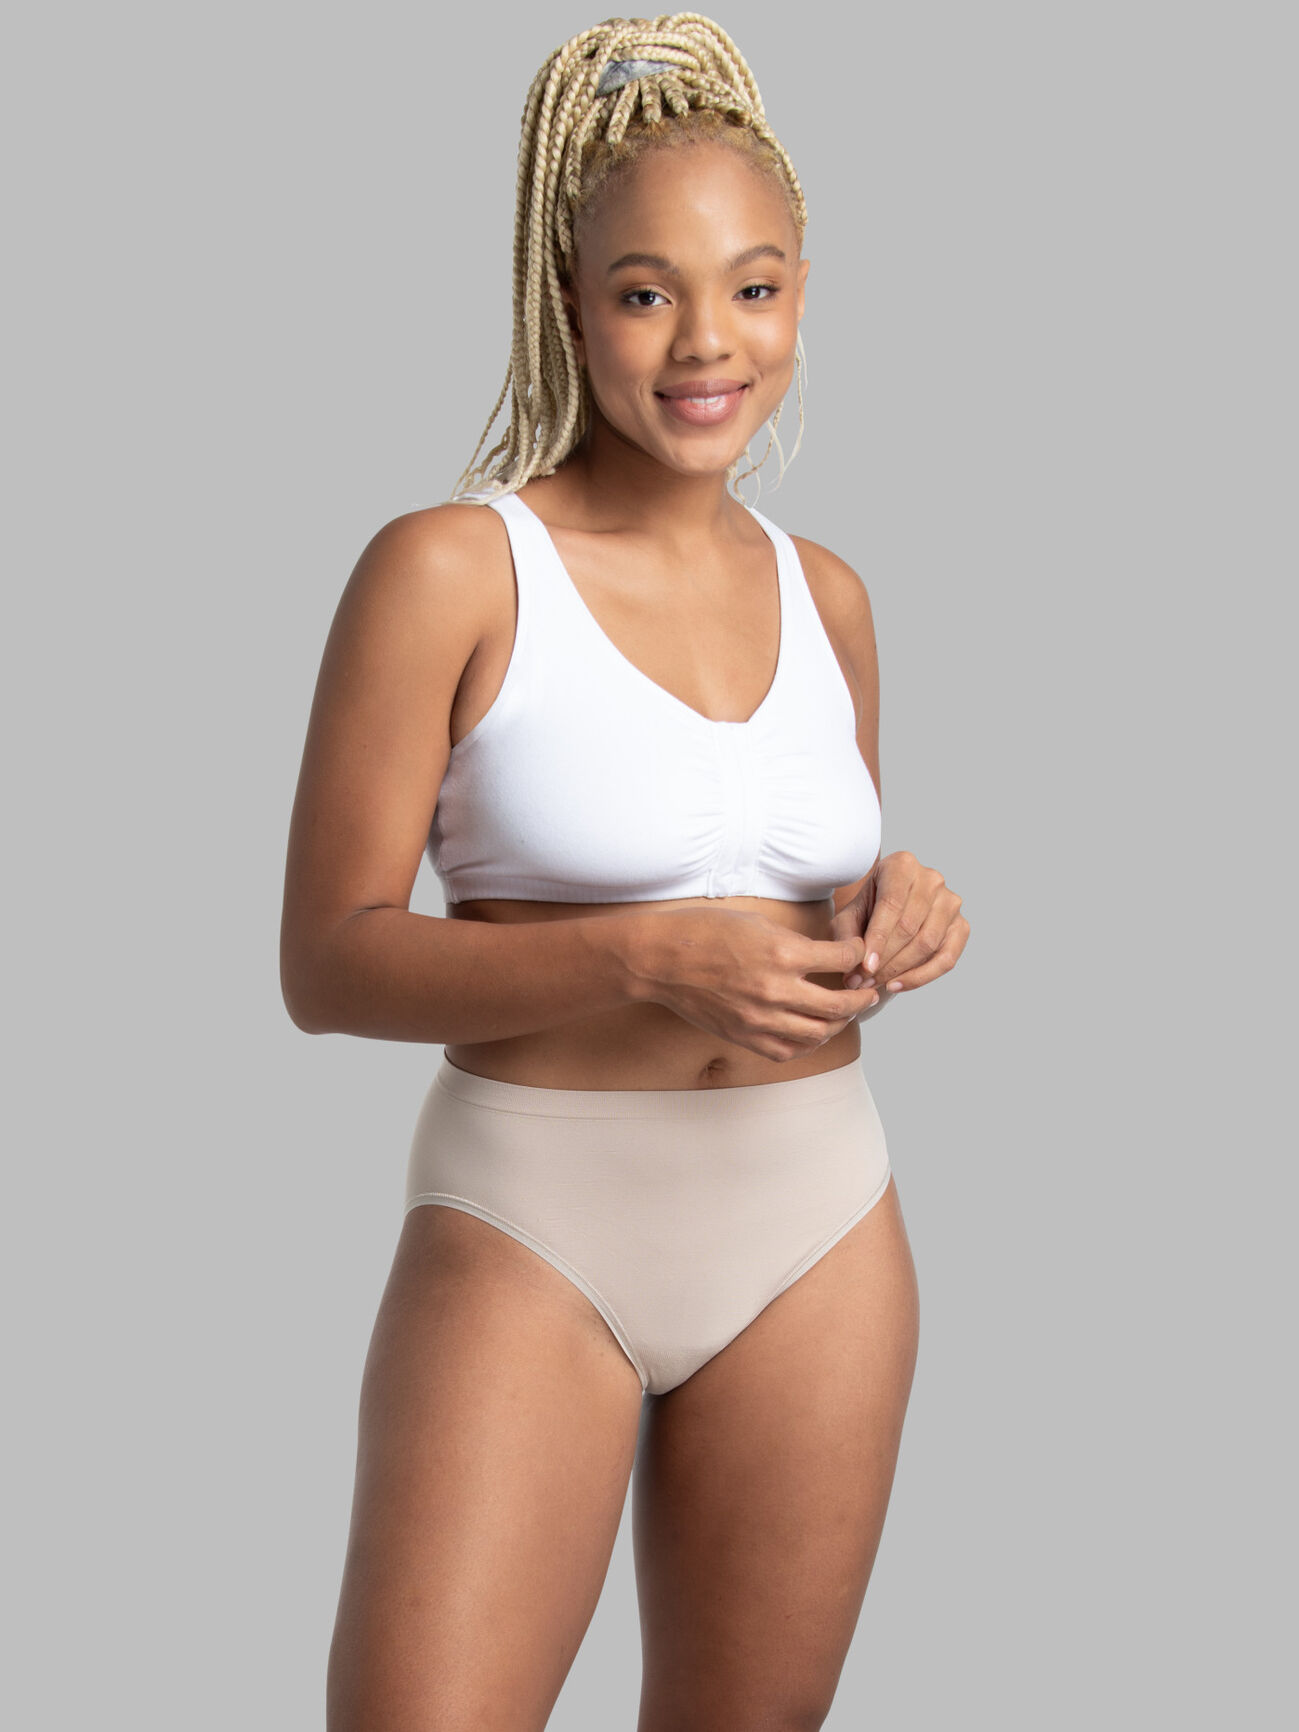 Women's Seamless Panties, 360 Stretch